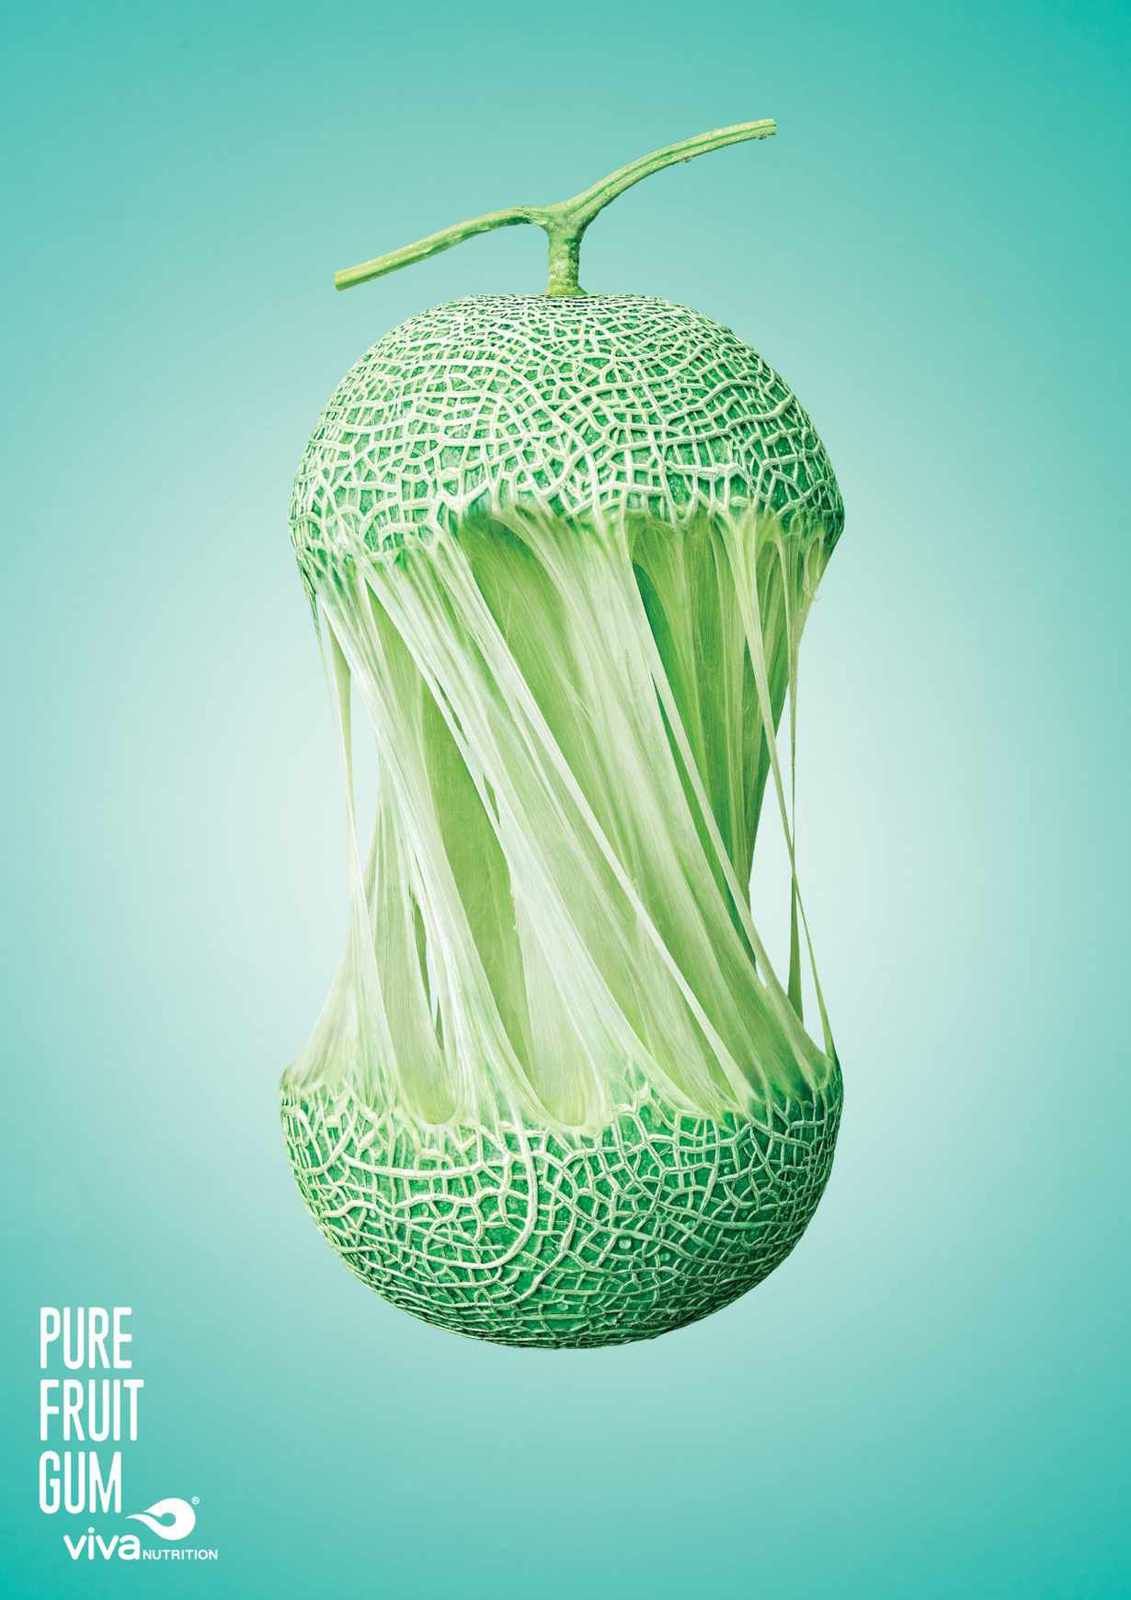 "Pure fruit gum" - Viva Nutrition | Agence : Goodstein, Shanghai, Chine (mai 2016)